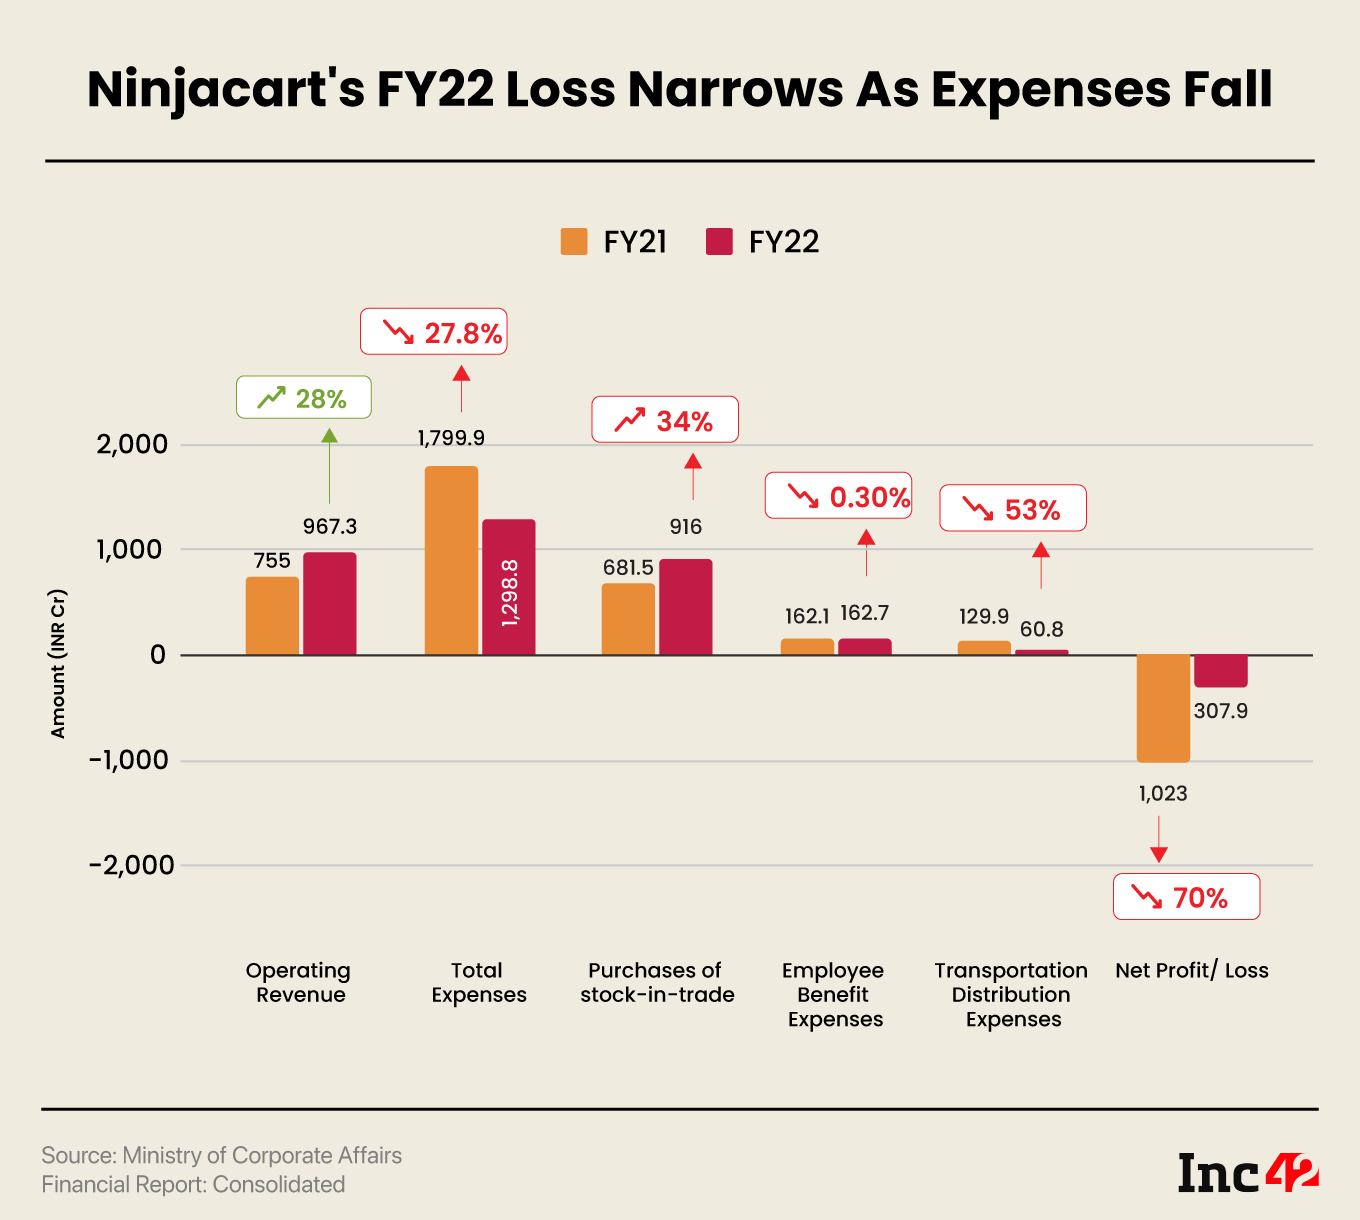 Flipkart-Backed Ninjacart’s Net Loss Narrows 70% To INR 308 Cr In FY22 